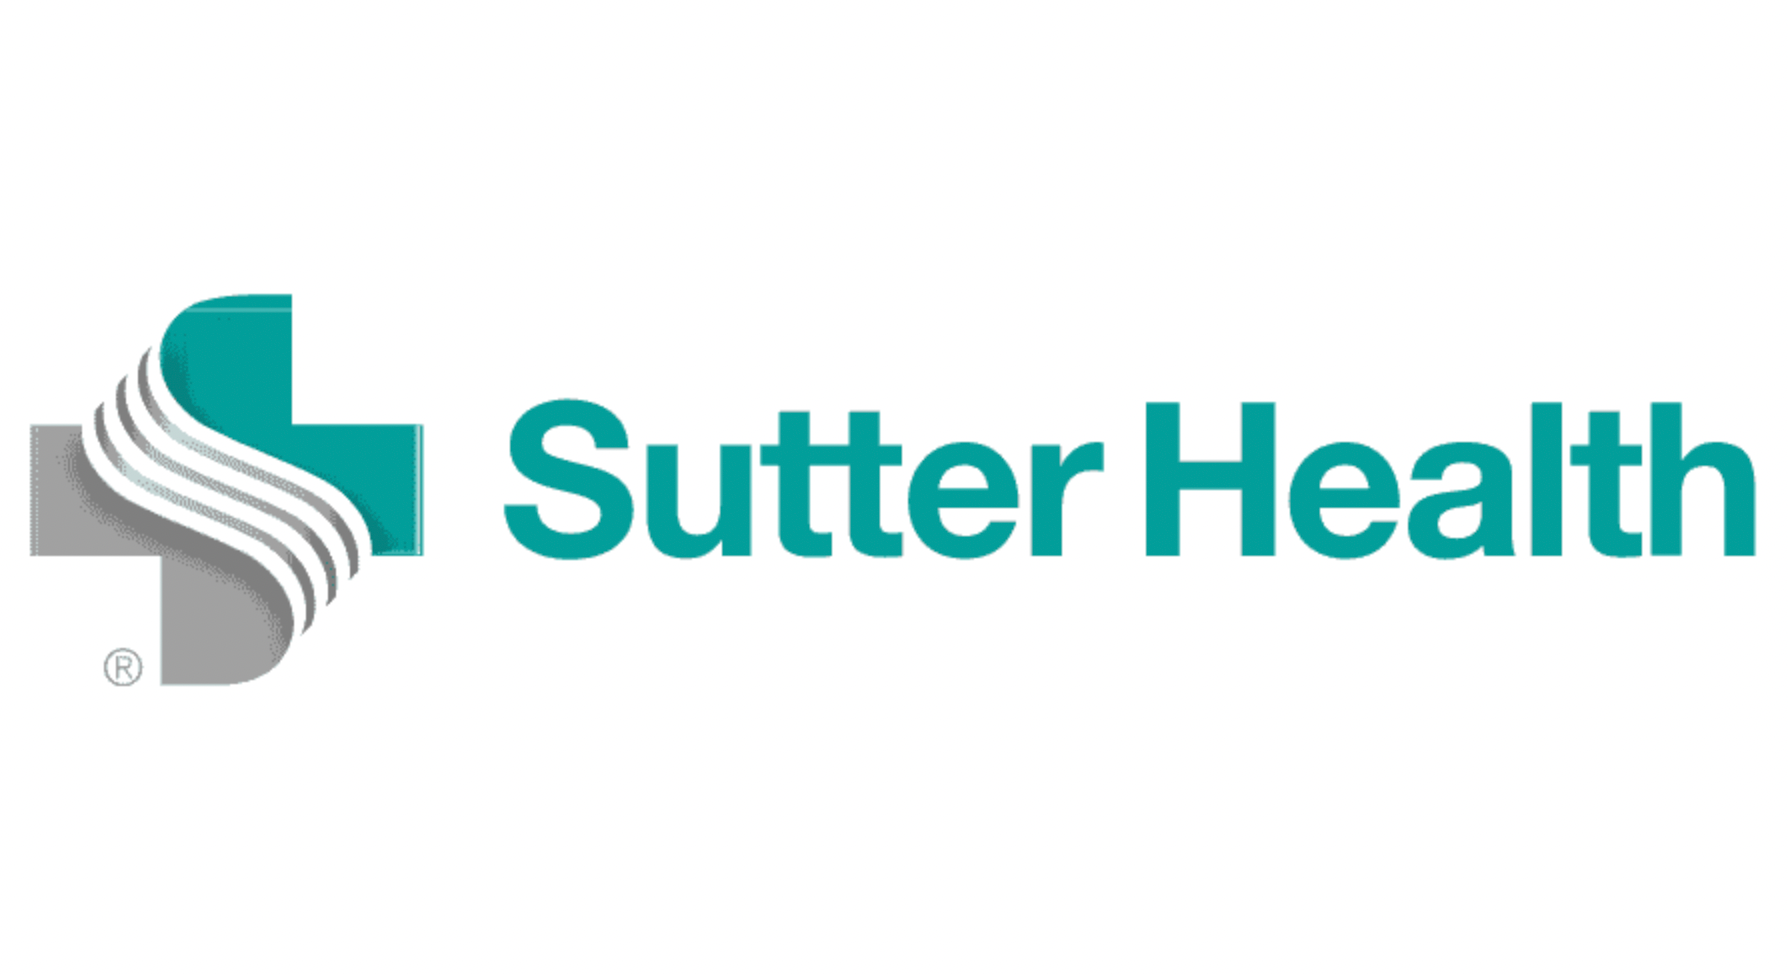 Sutter health logo